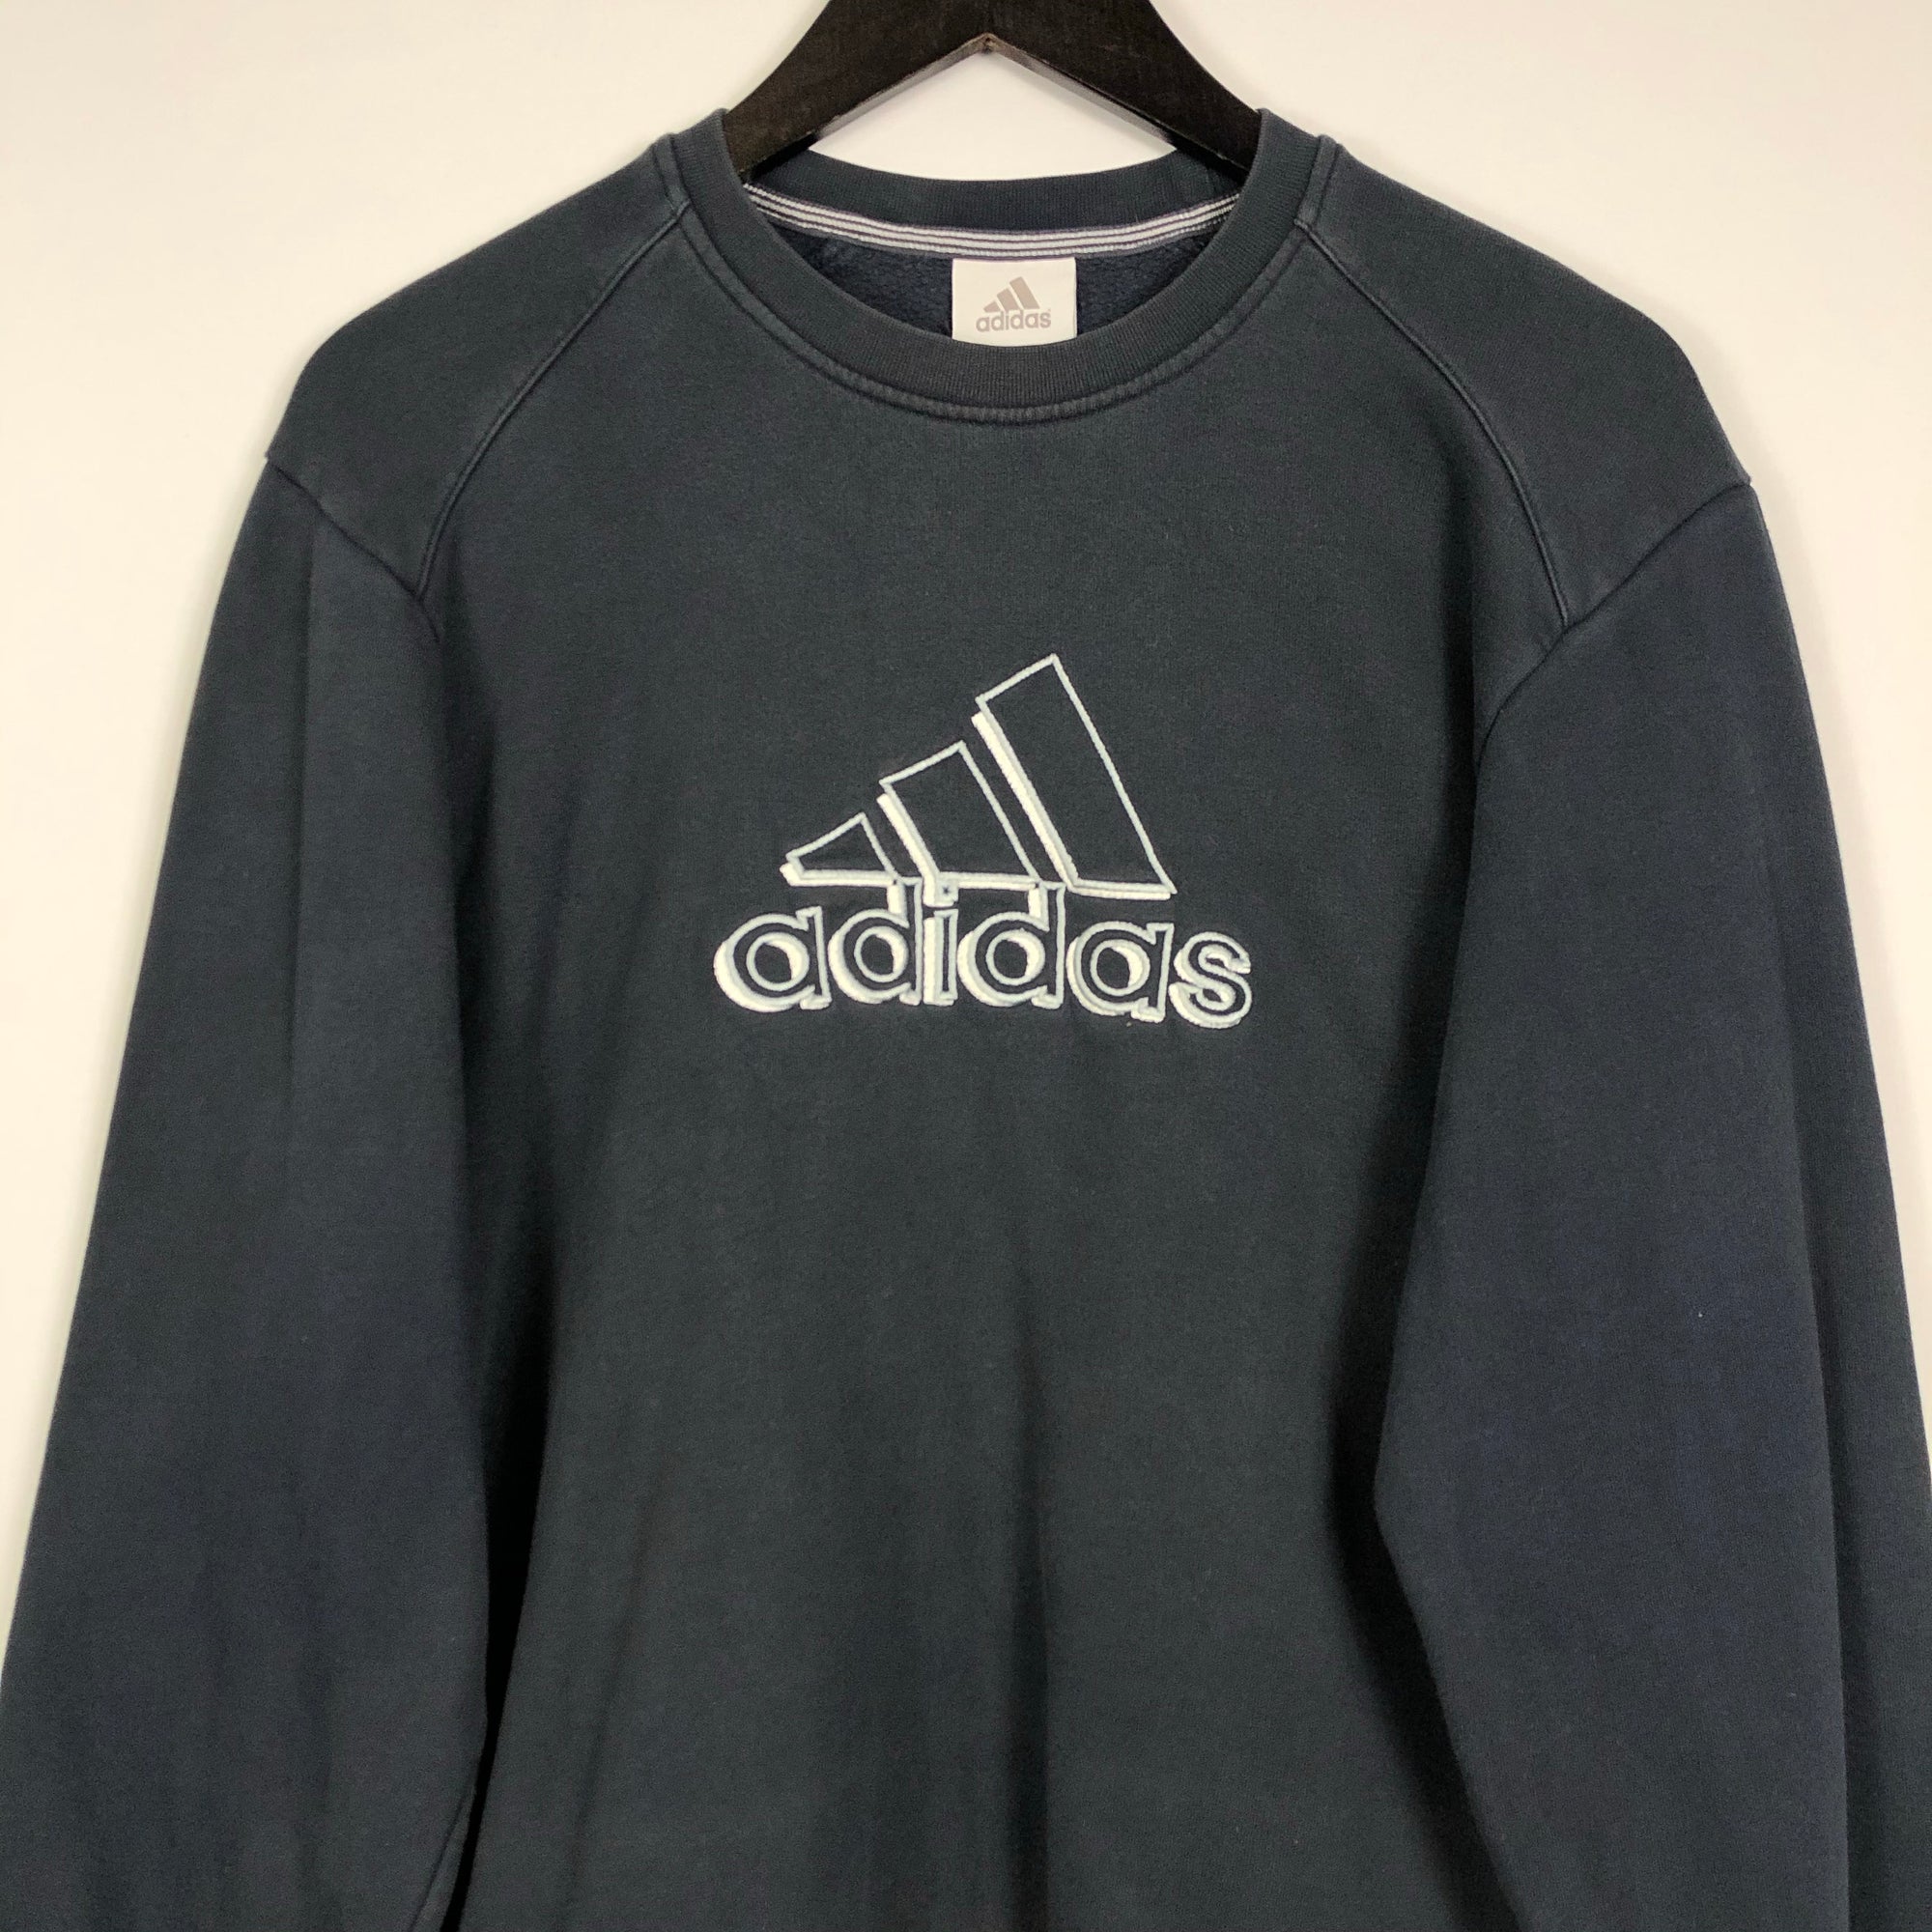 Vintage Adidas Spellout Sweatshirt in Navy - Men’s Medium/Women’s Large